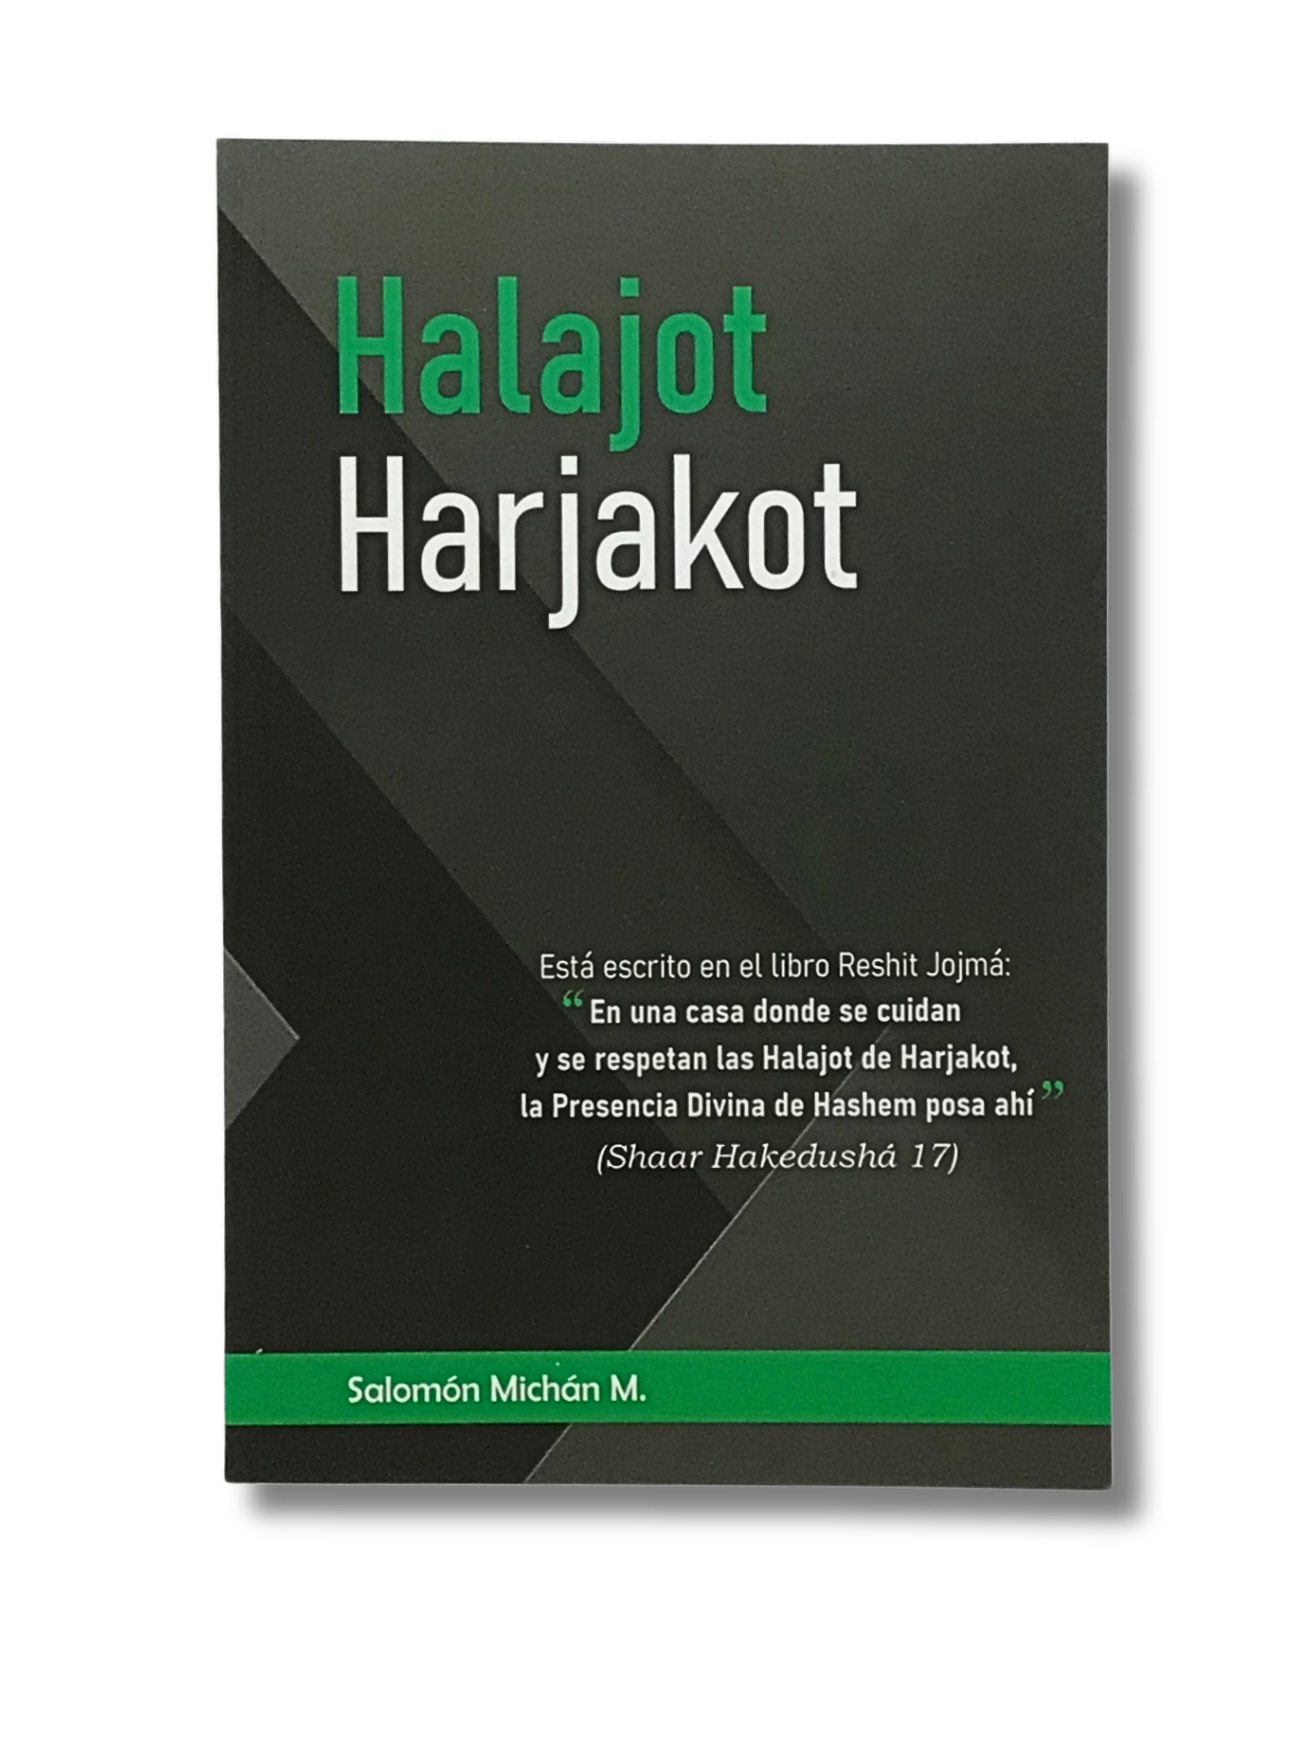 Halajot Harjakot